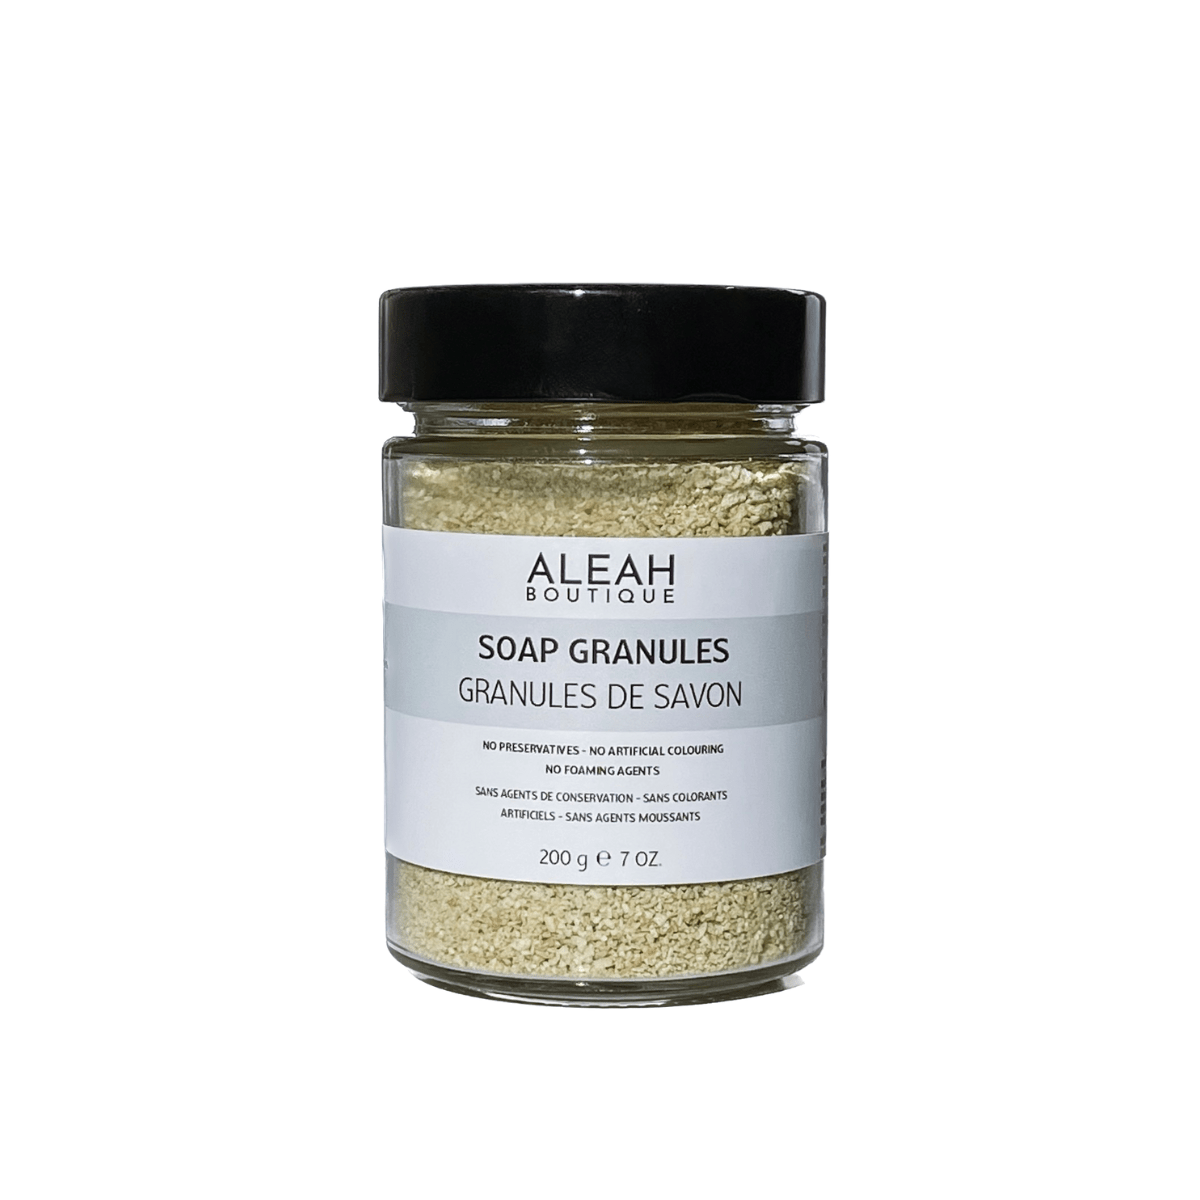 Olive oil soap granules in glass jar with black cap